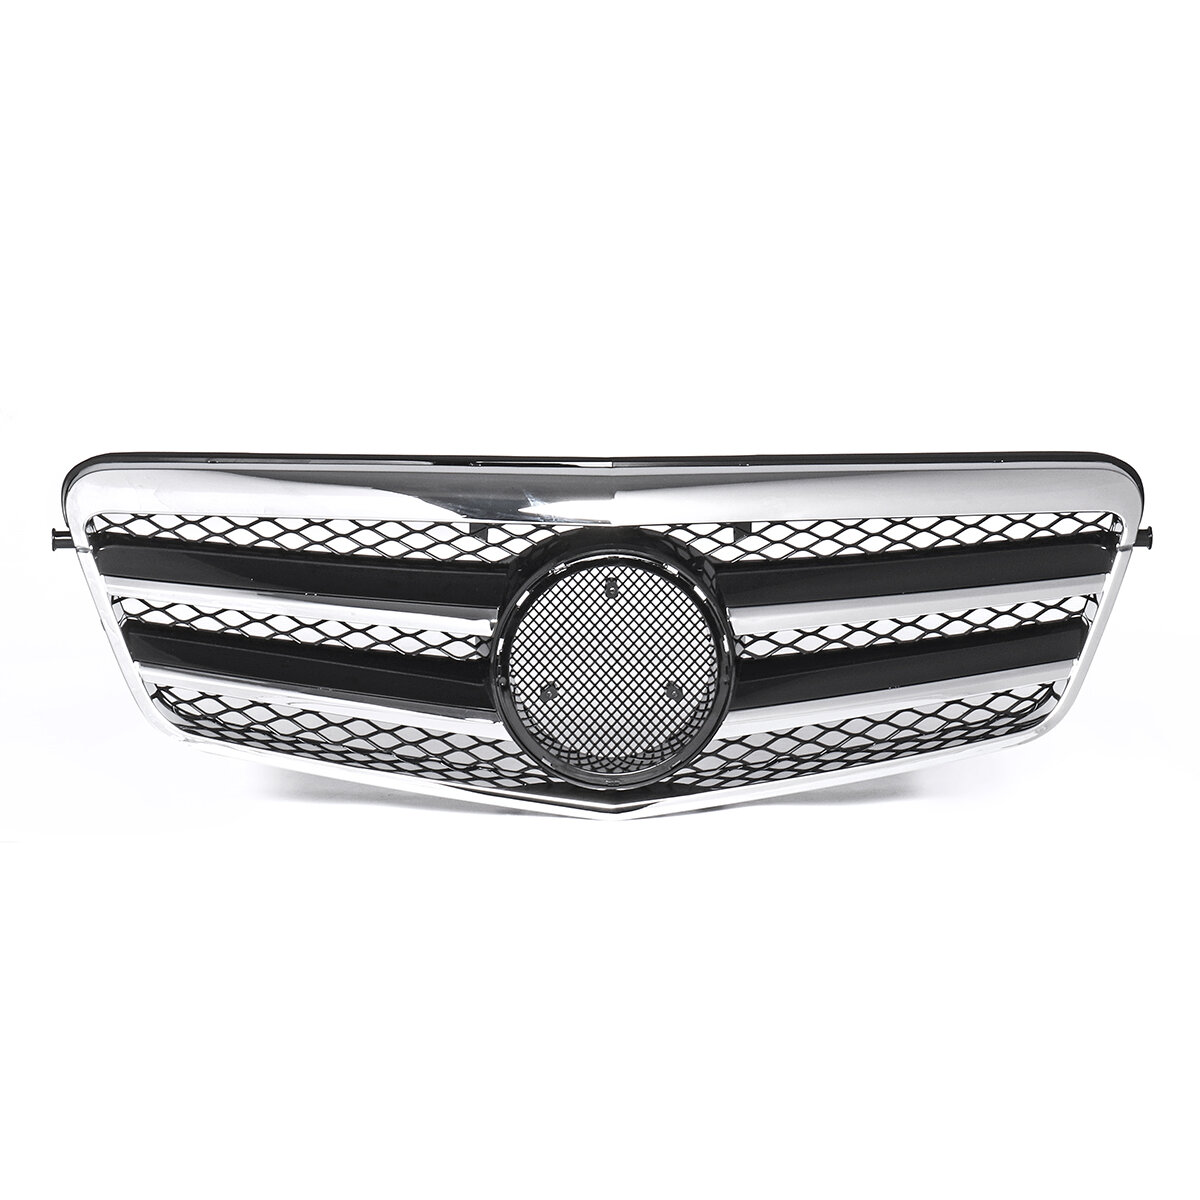 

Chrome Silver AMG Style Front Grill Grille For Mercedes Benz W212 E250 E550 E350 E63 AMG 2010-2013